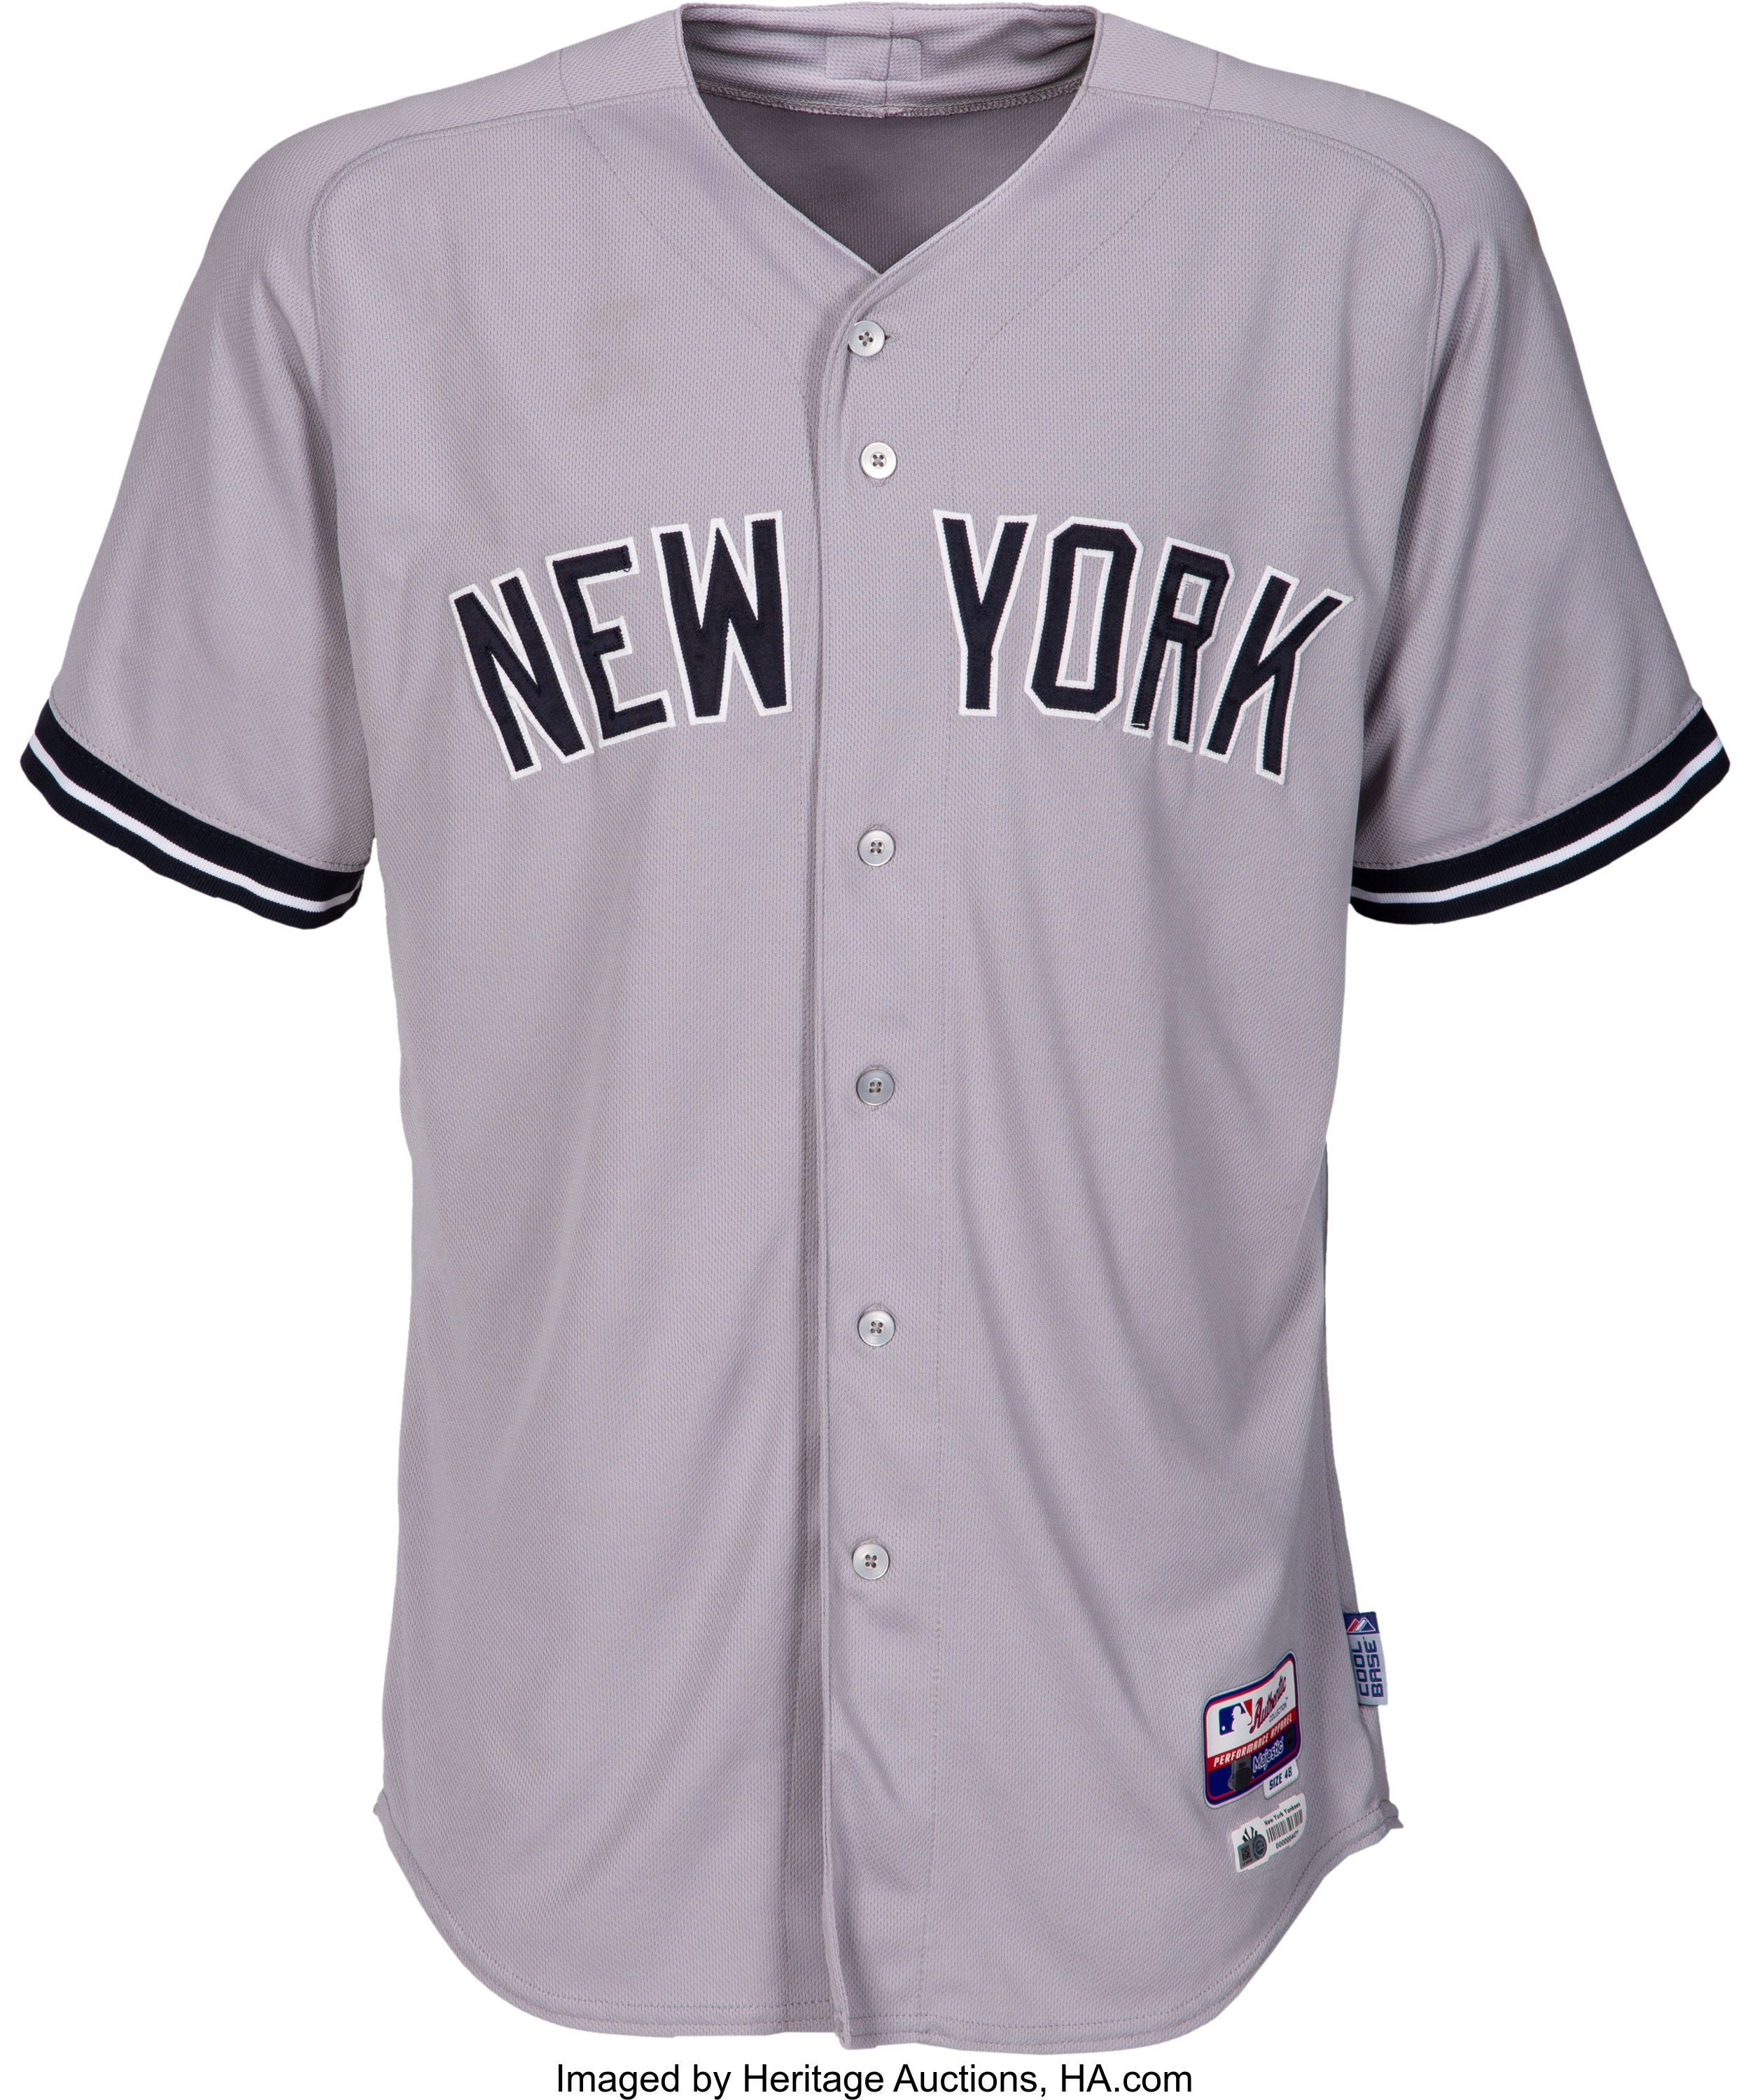 Mark Teixeira New York Yankees MLB Jerseys for sale